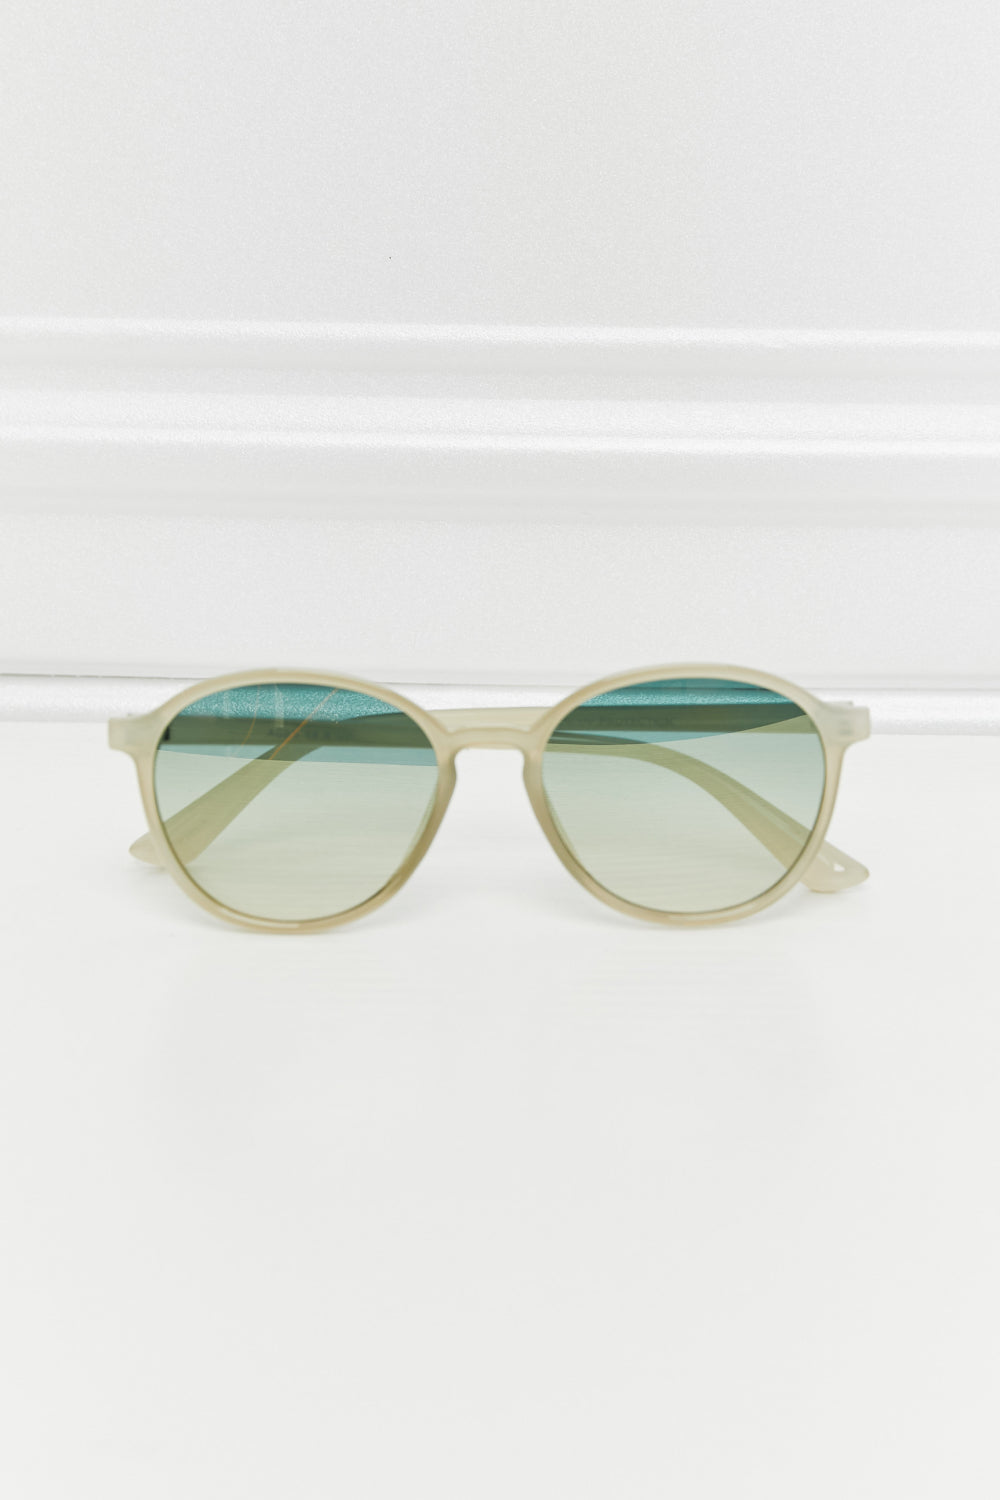 Full Rim Polycarbonate Frame Sunglasses Mist Green One Size Sunglasses by Vim&Vigor | Vim&Vigor Boutique